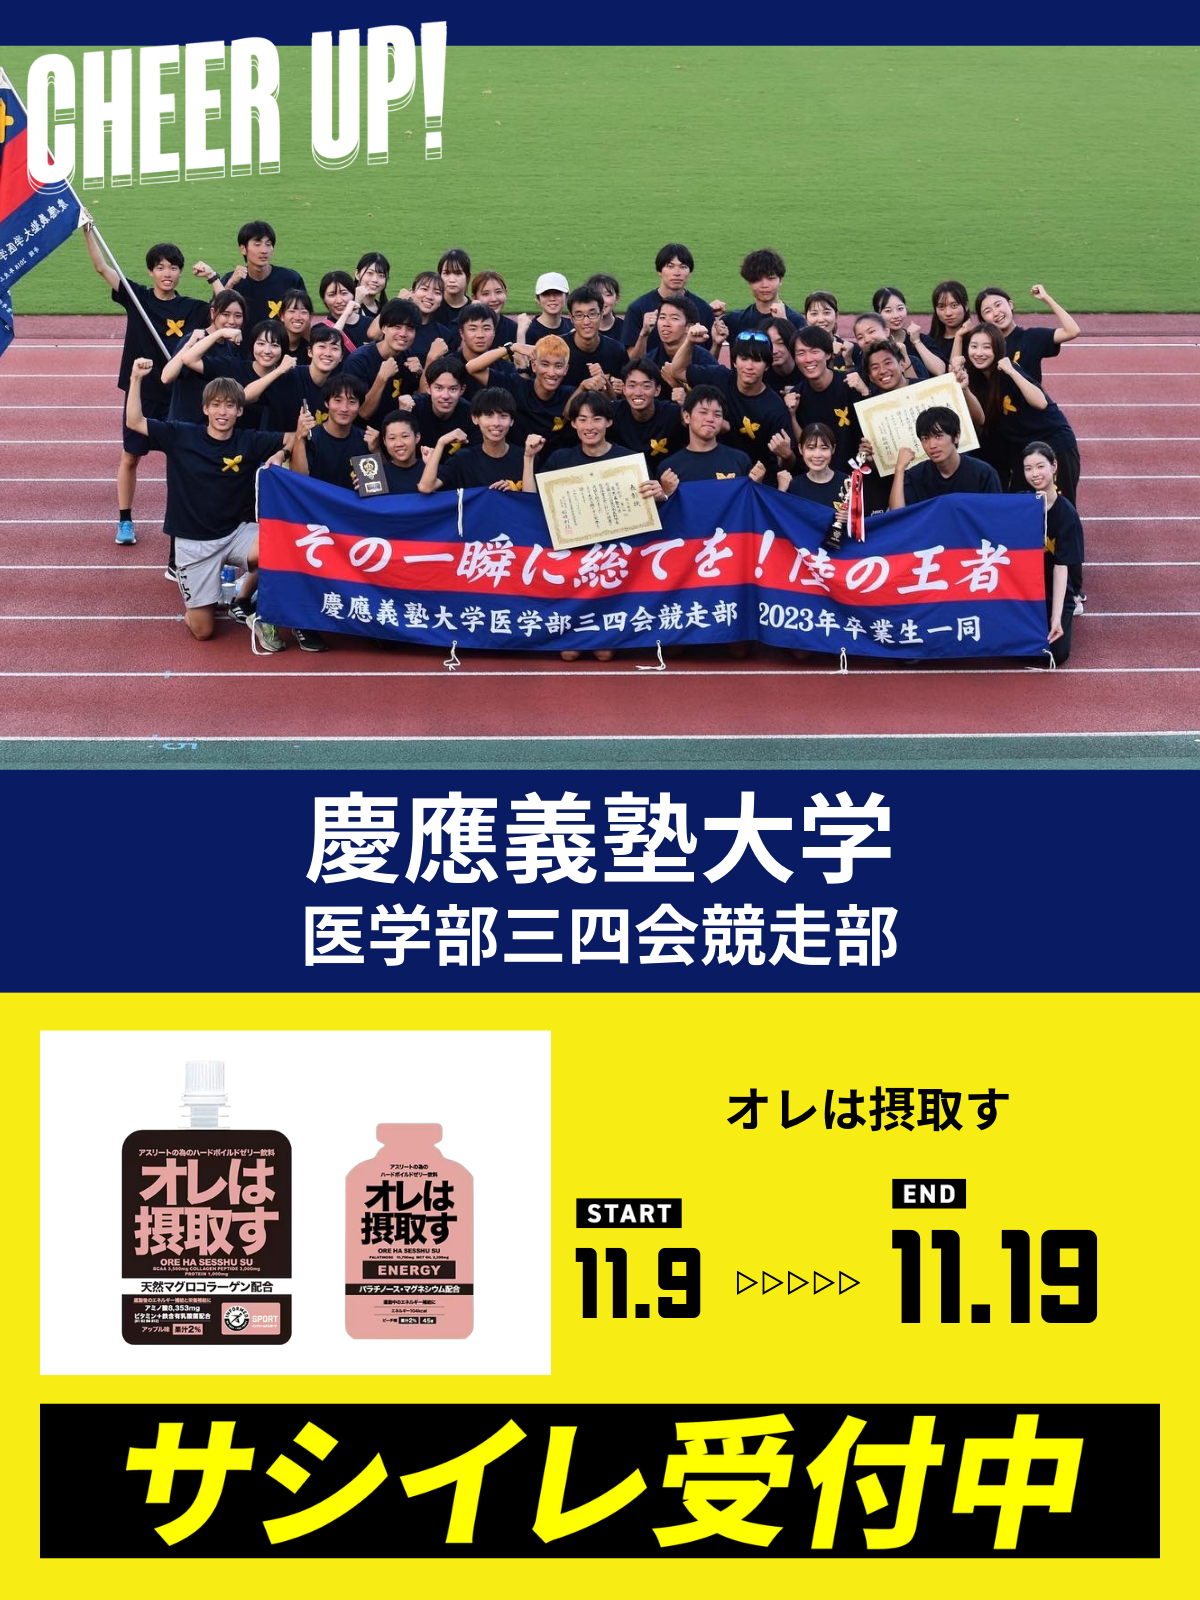 CHEER UP! for 慶應義塾大学　医学部三四会競争部